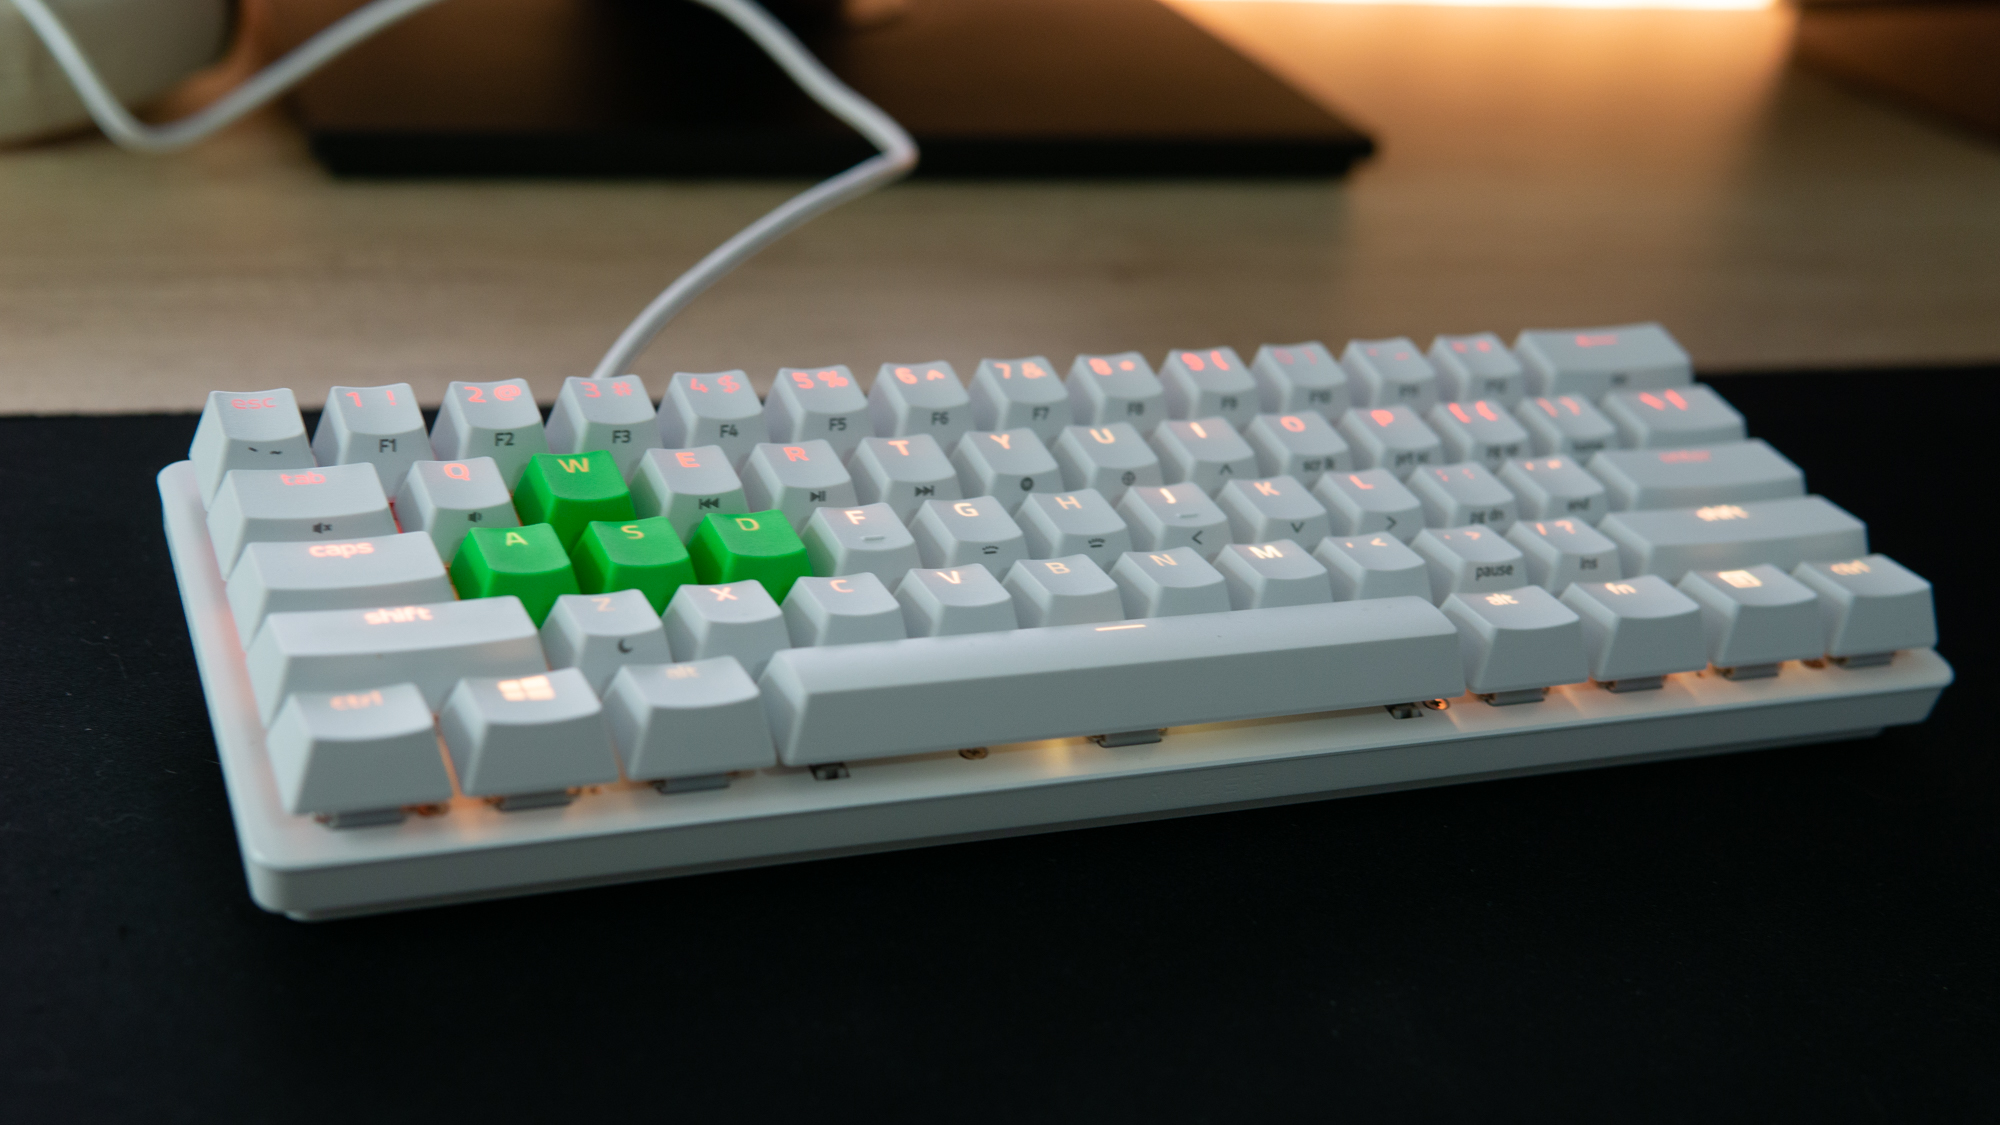 Razer Hunstman Mini: Small Gaming Keyboards, Done Right